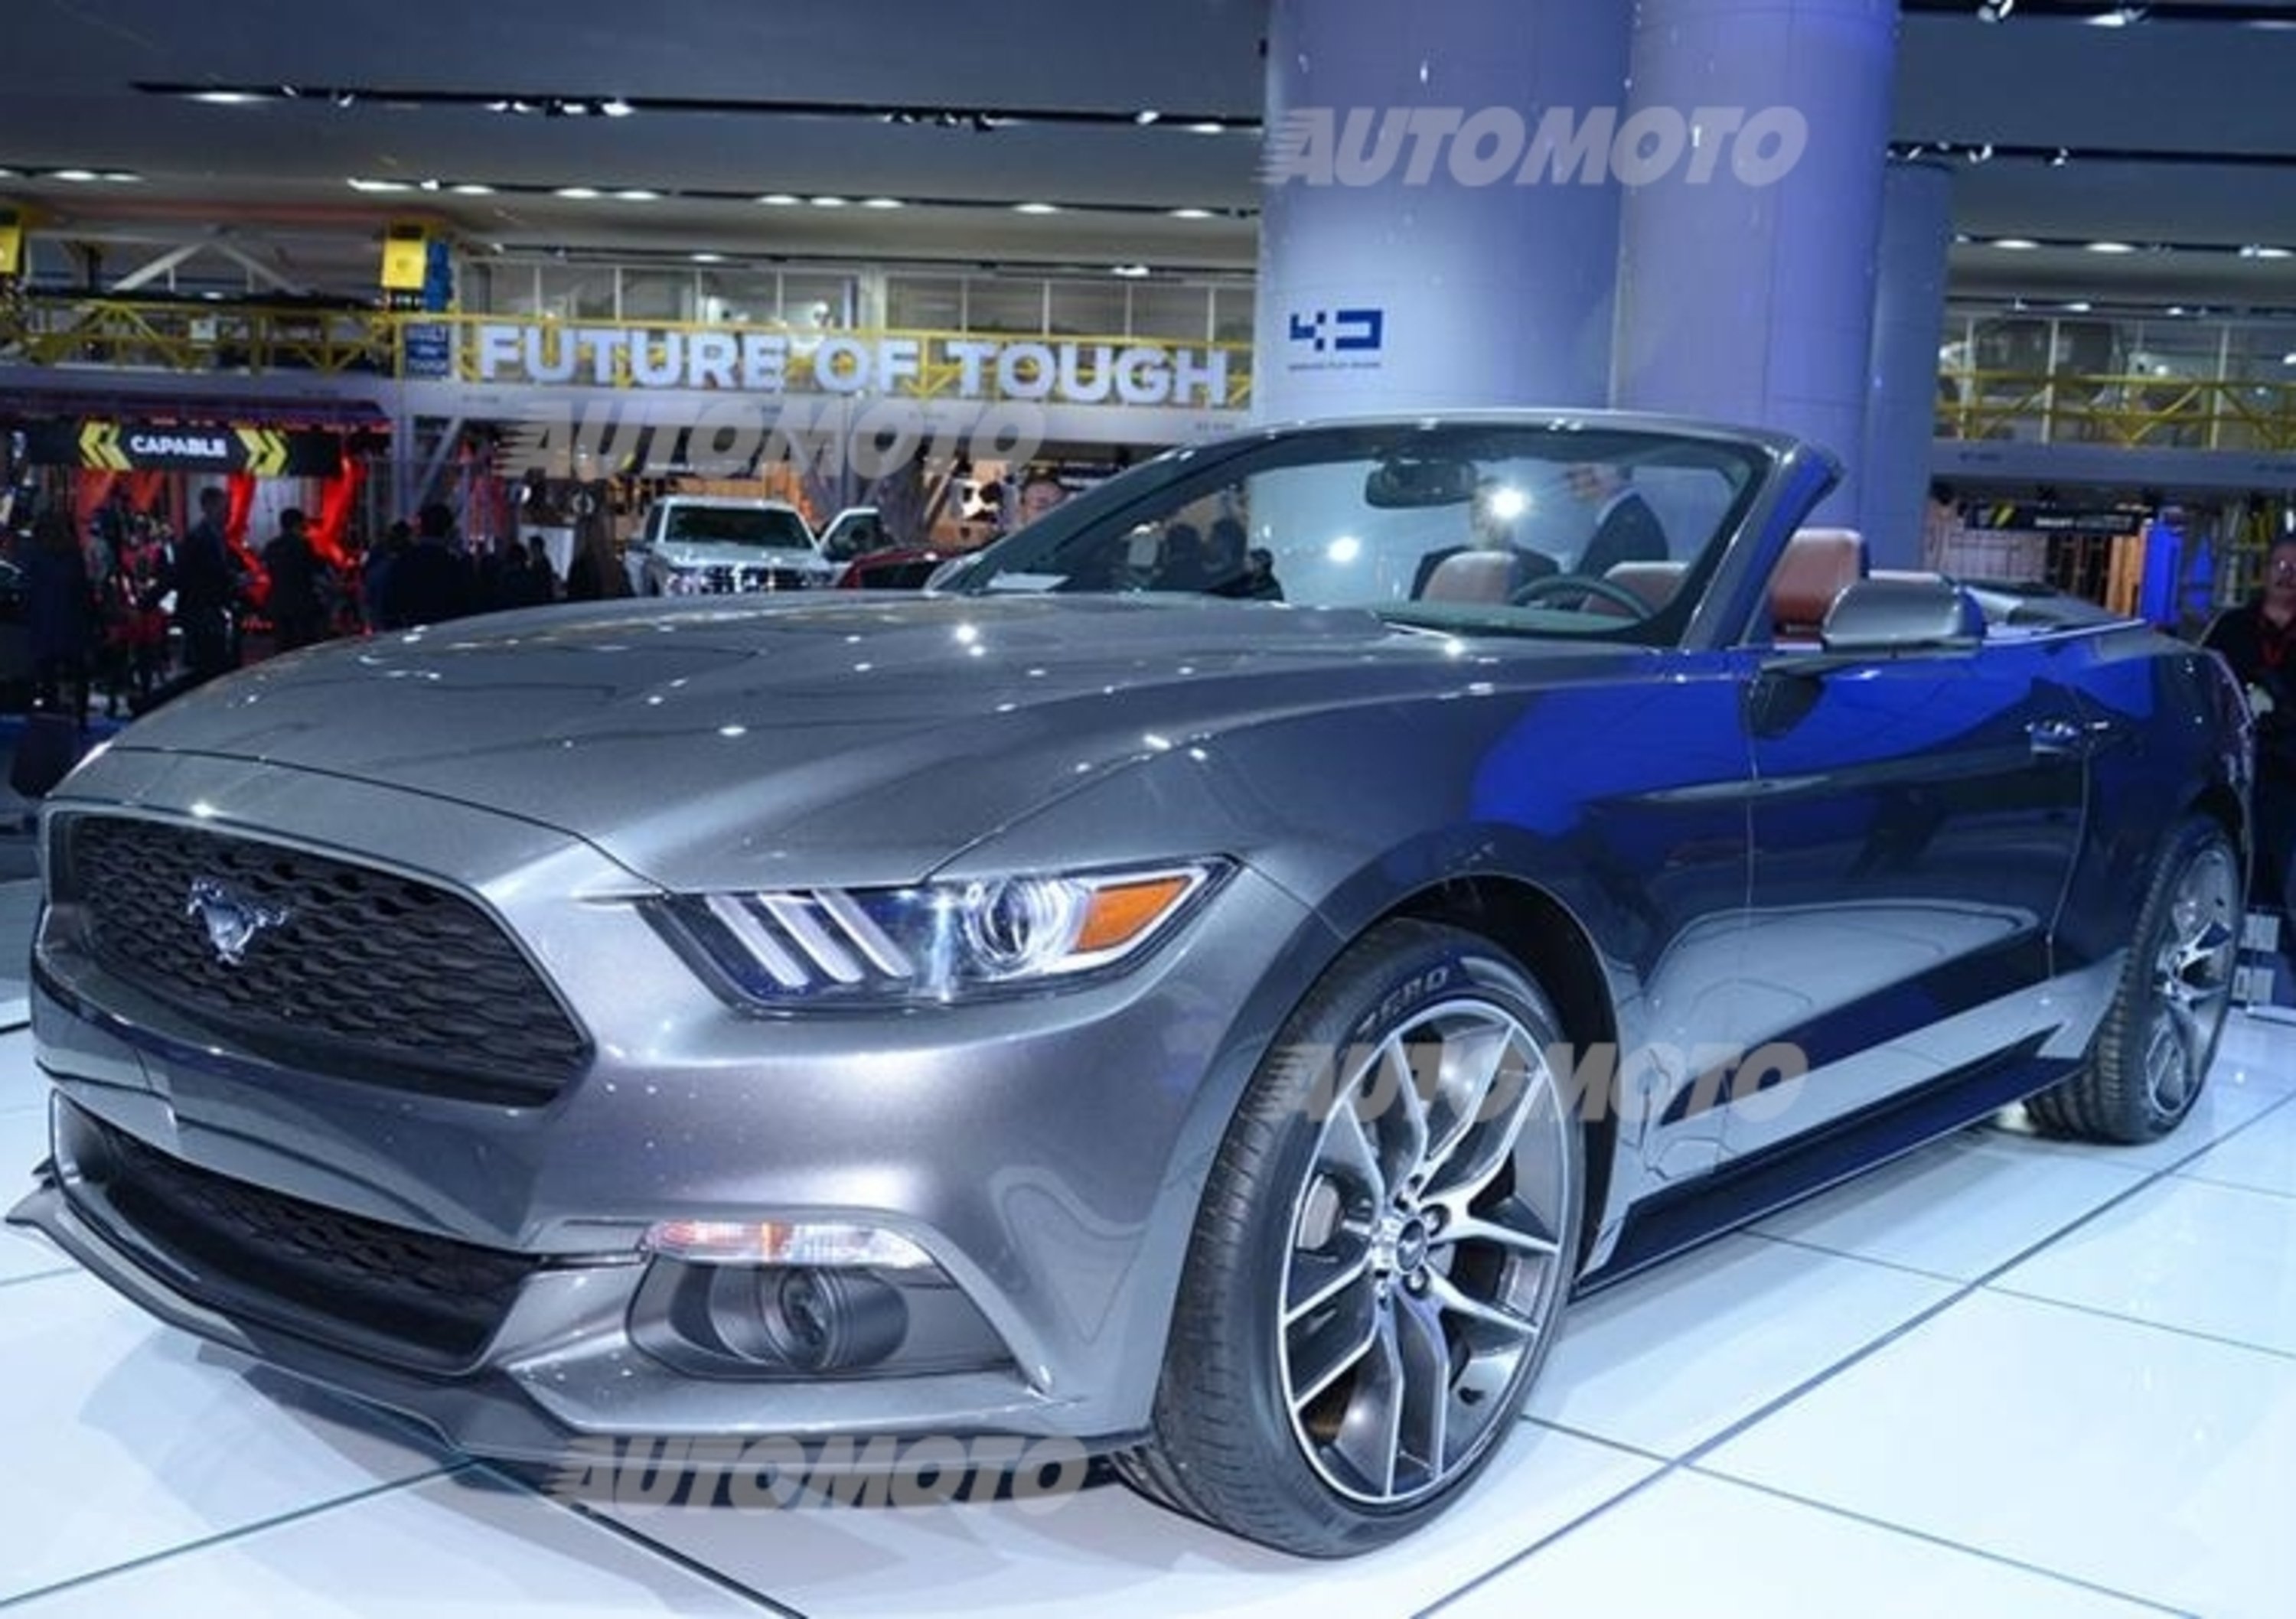 Nuova Ford Mustang Convertible: eccola a Detroit